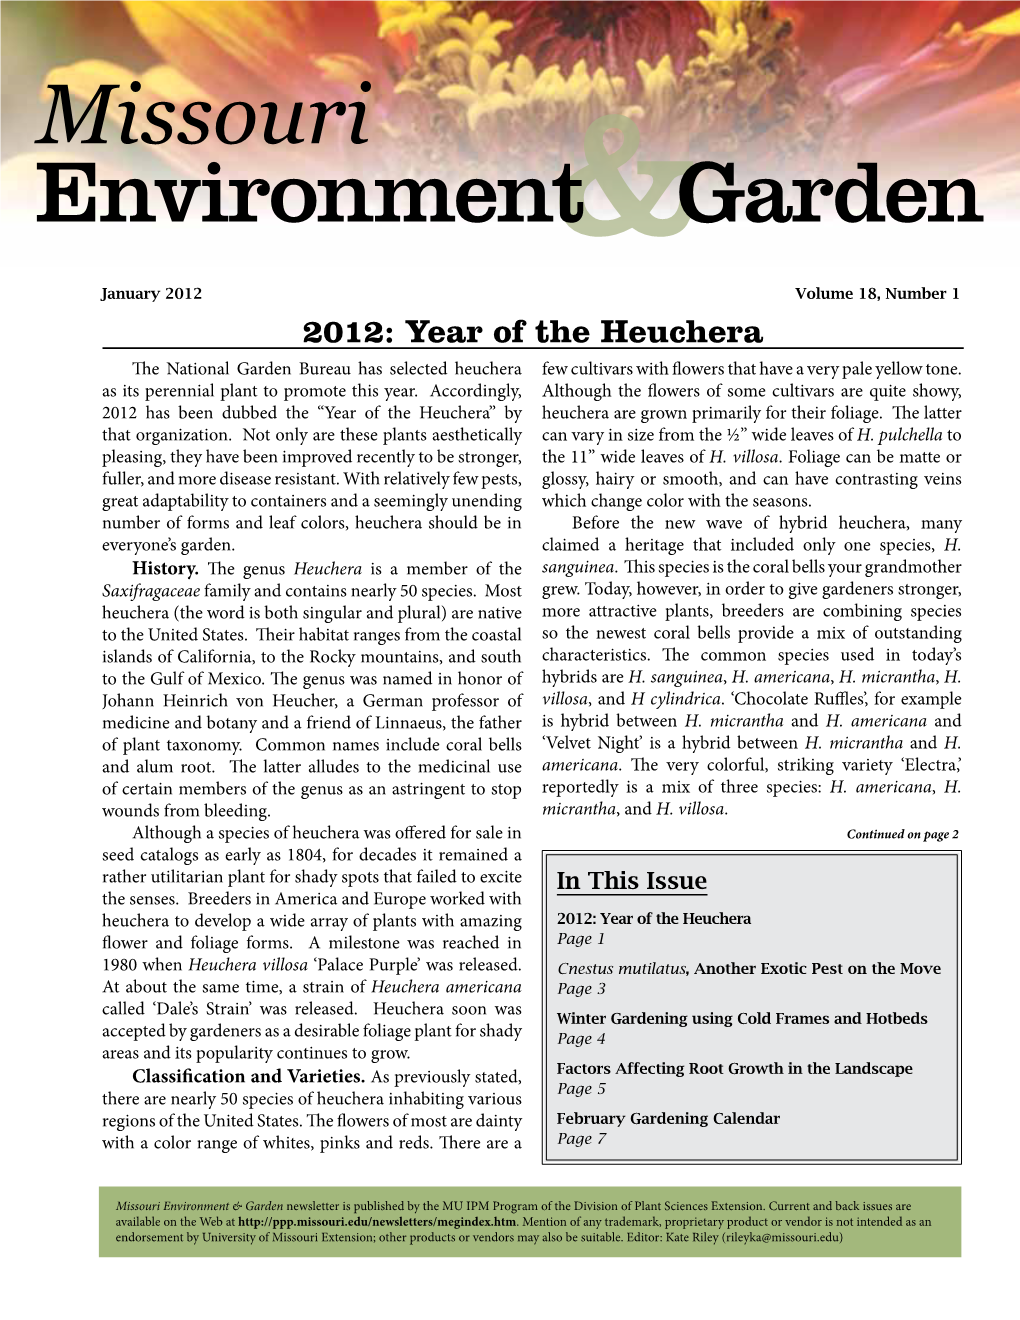 Missouri Environment and Garden Newsletter, January 2012